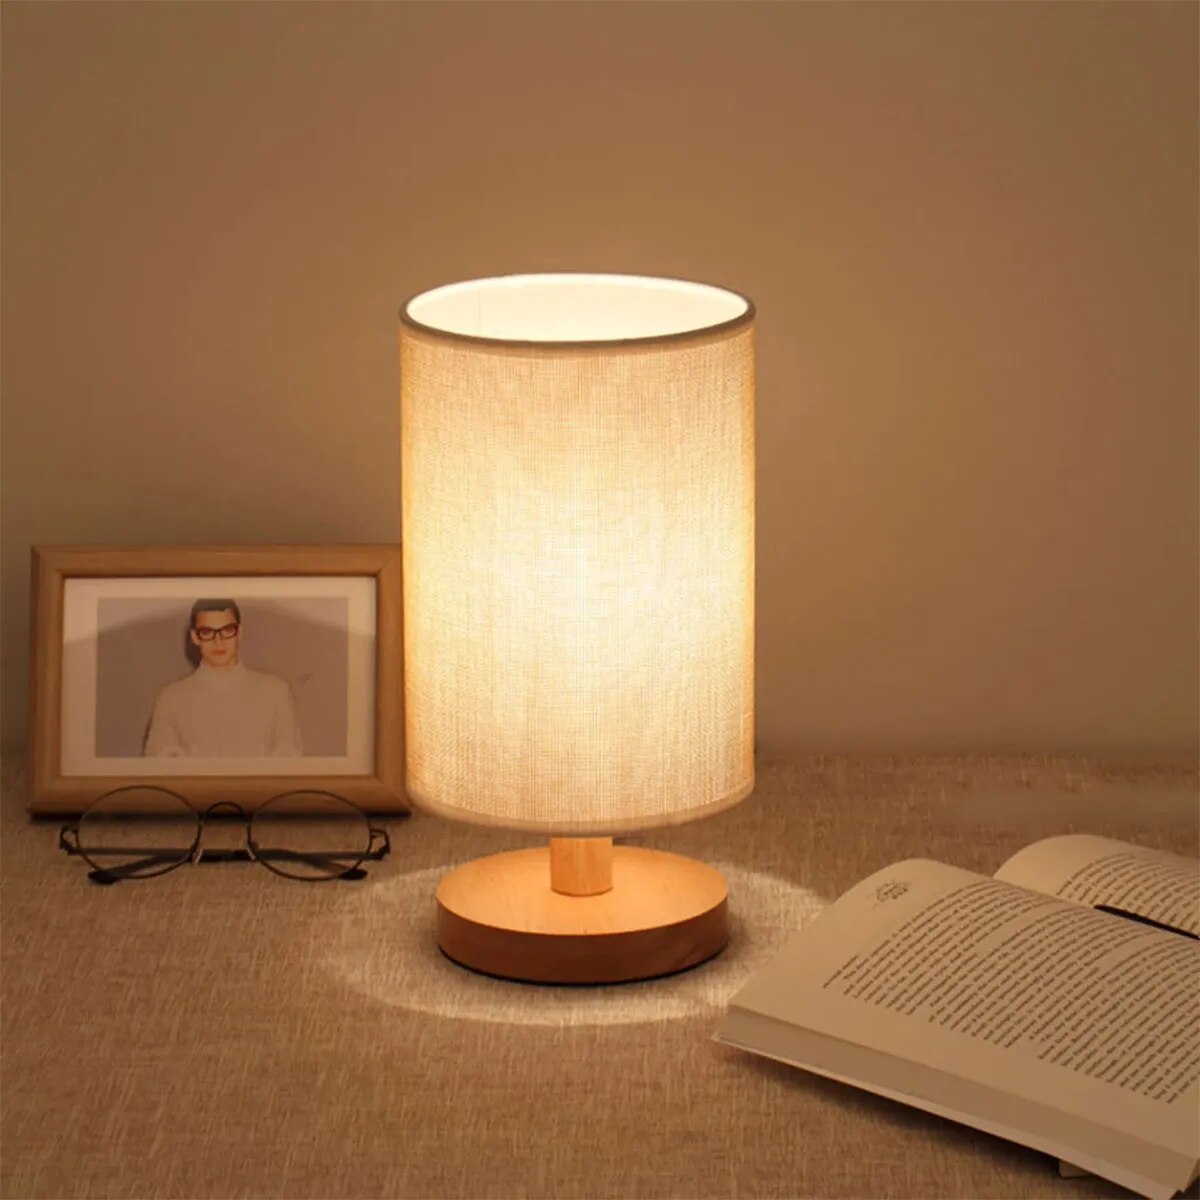 Lampe de chevet Bois Originale Nature - lampechevetdesign.com